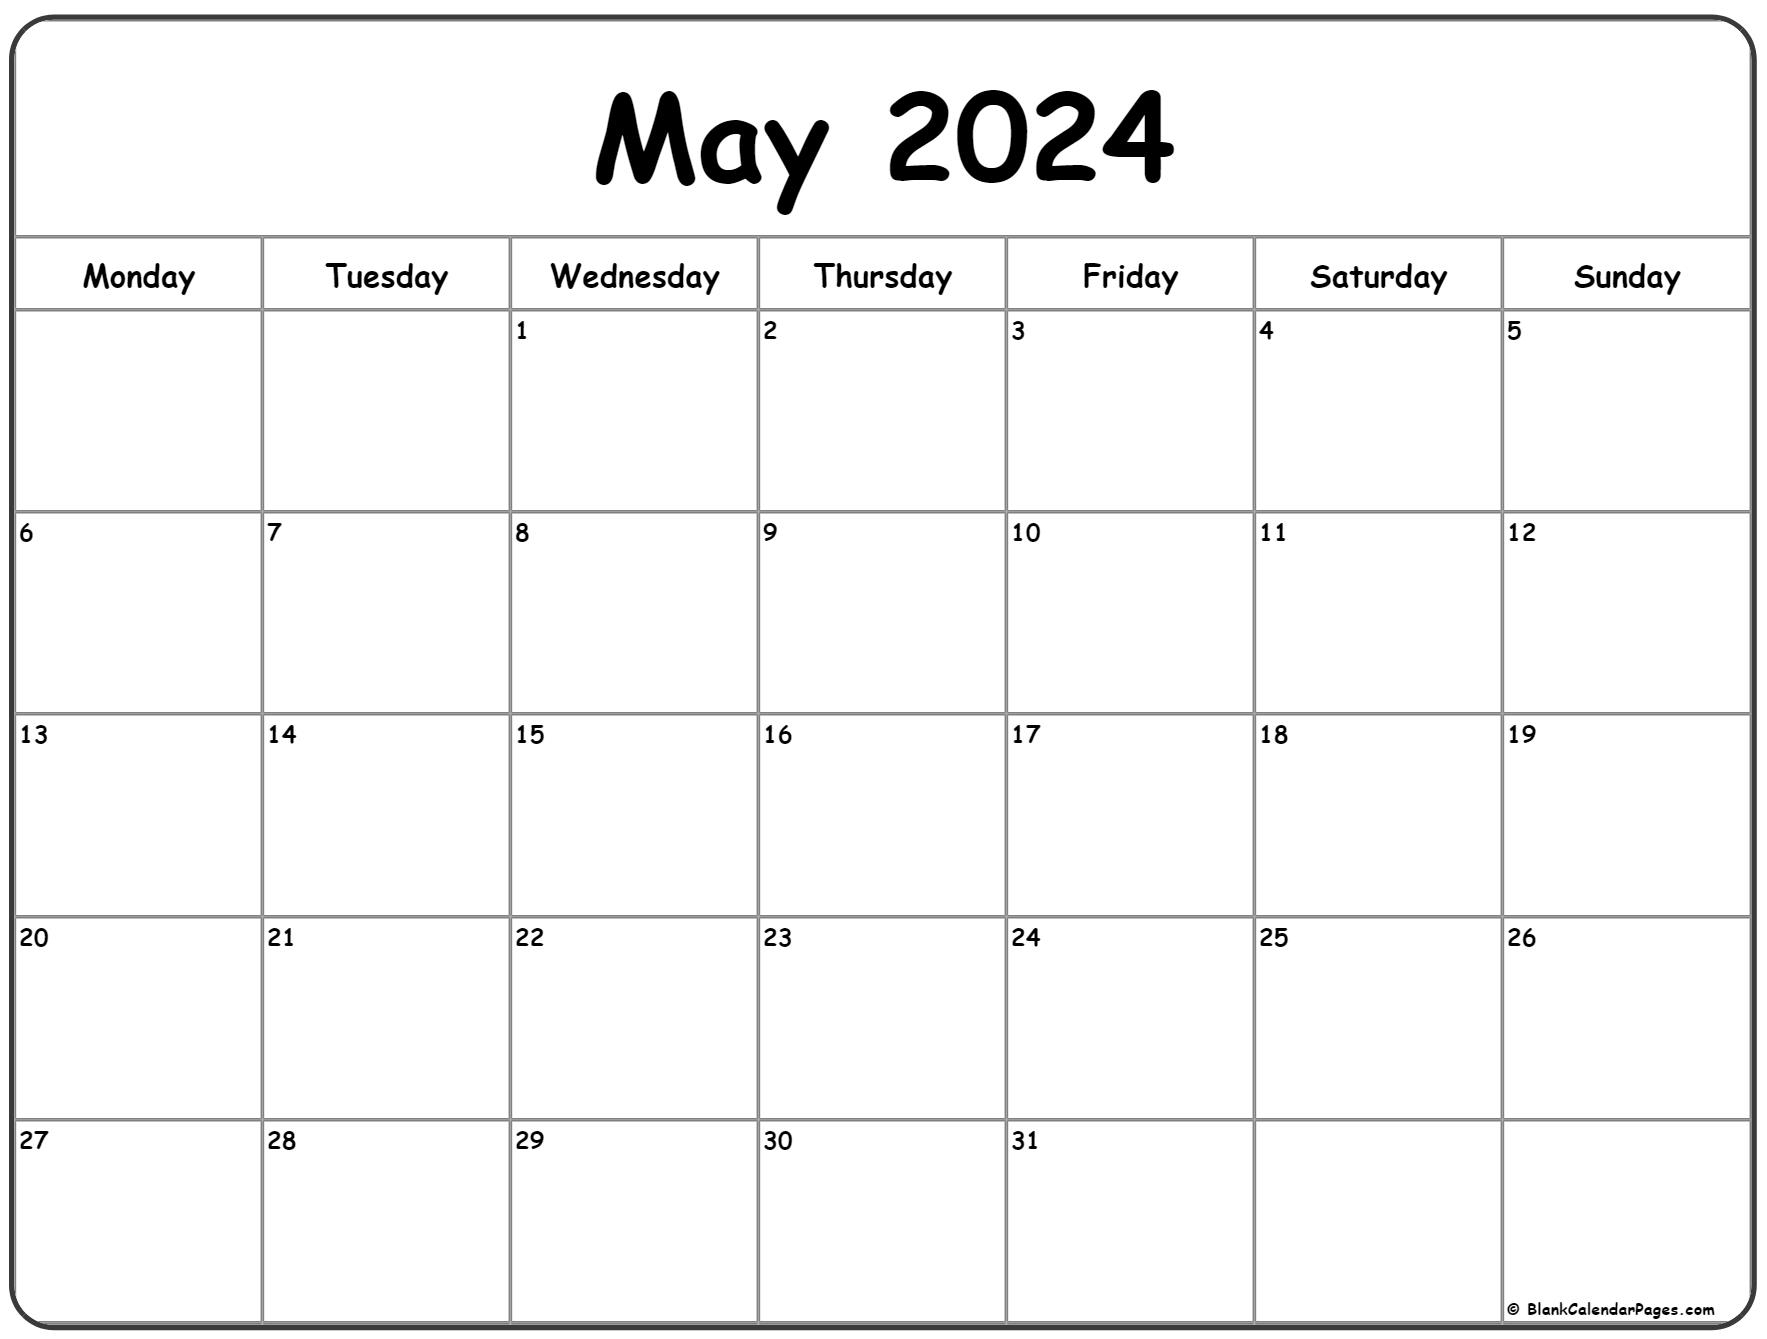 May 2024 Monday Calendar | Monday To Sunday for Printable Blank Calendar For May 2024